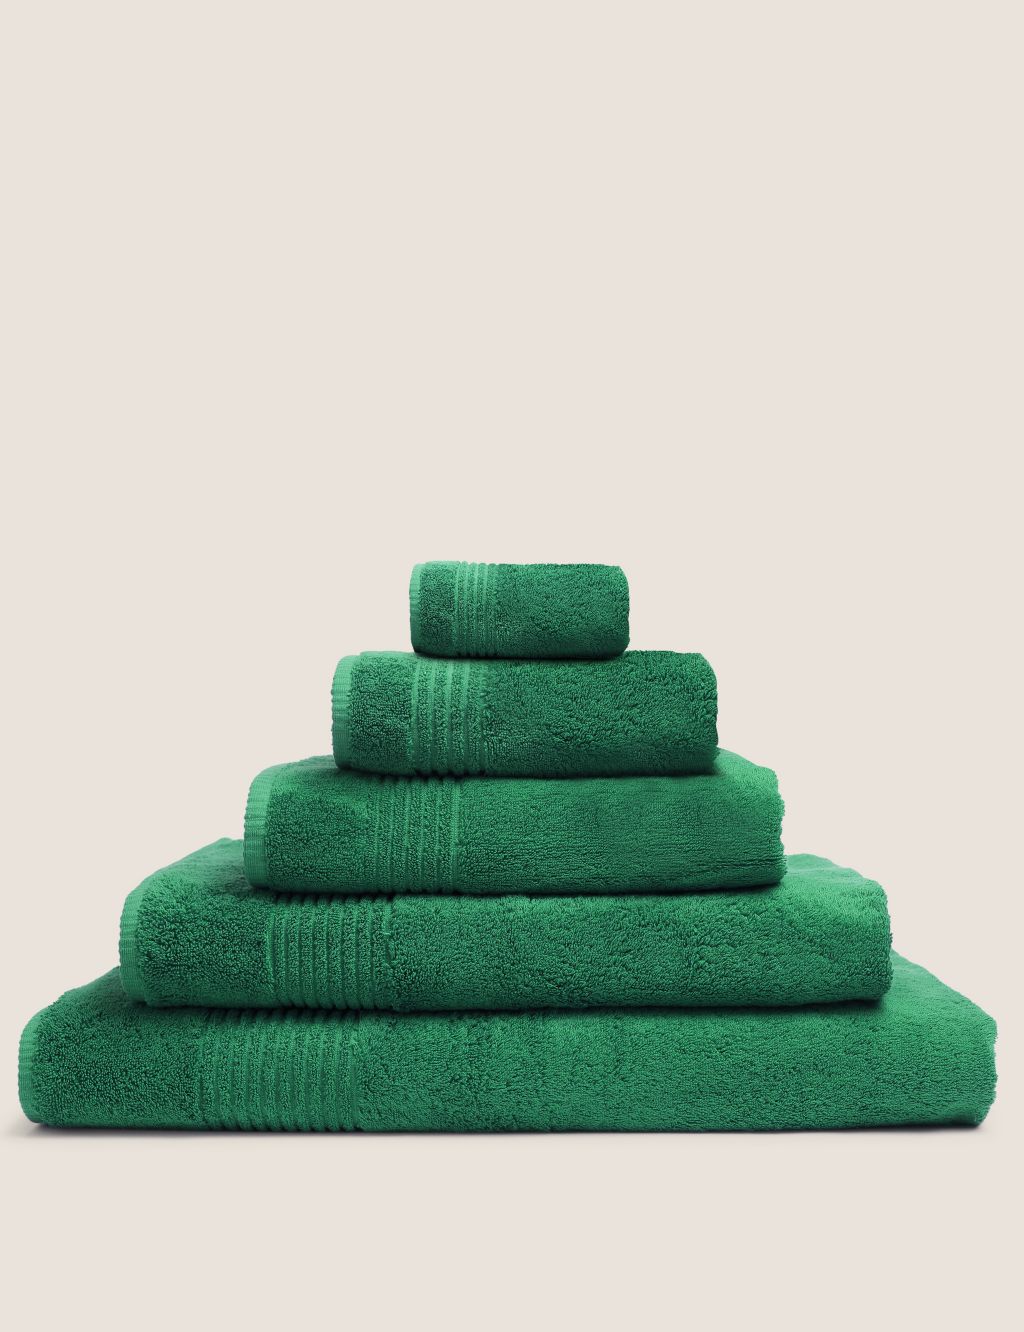 Egyptian Cotton Luxury Towel image 2